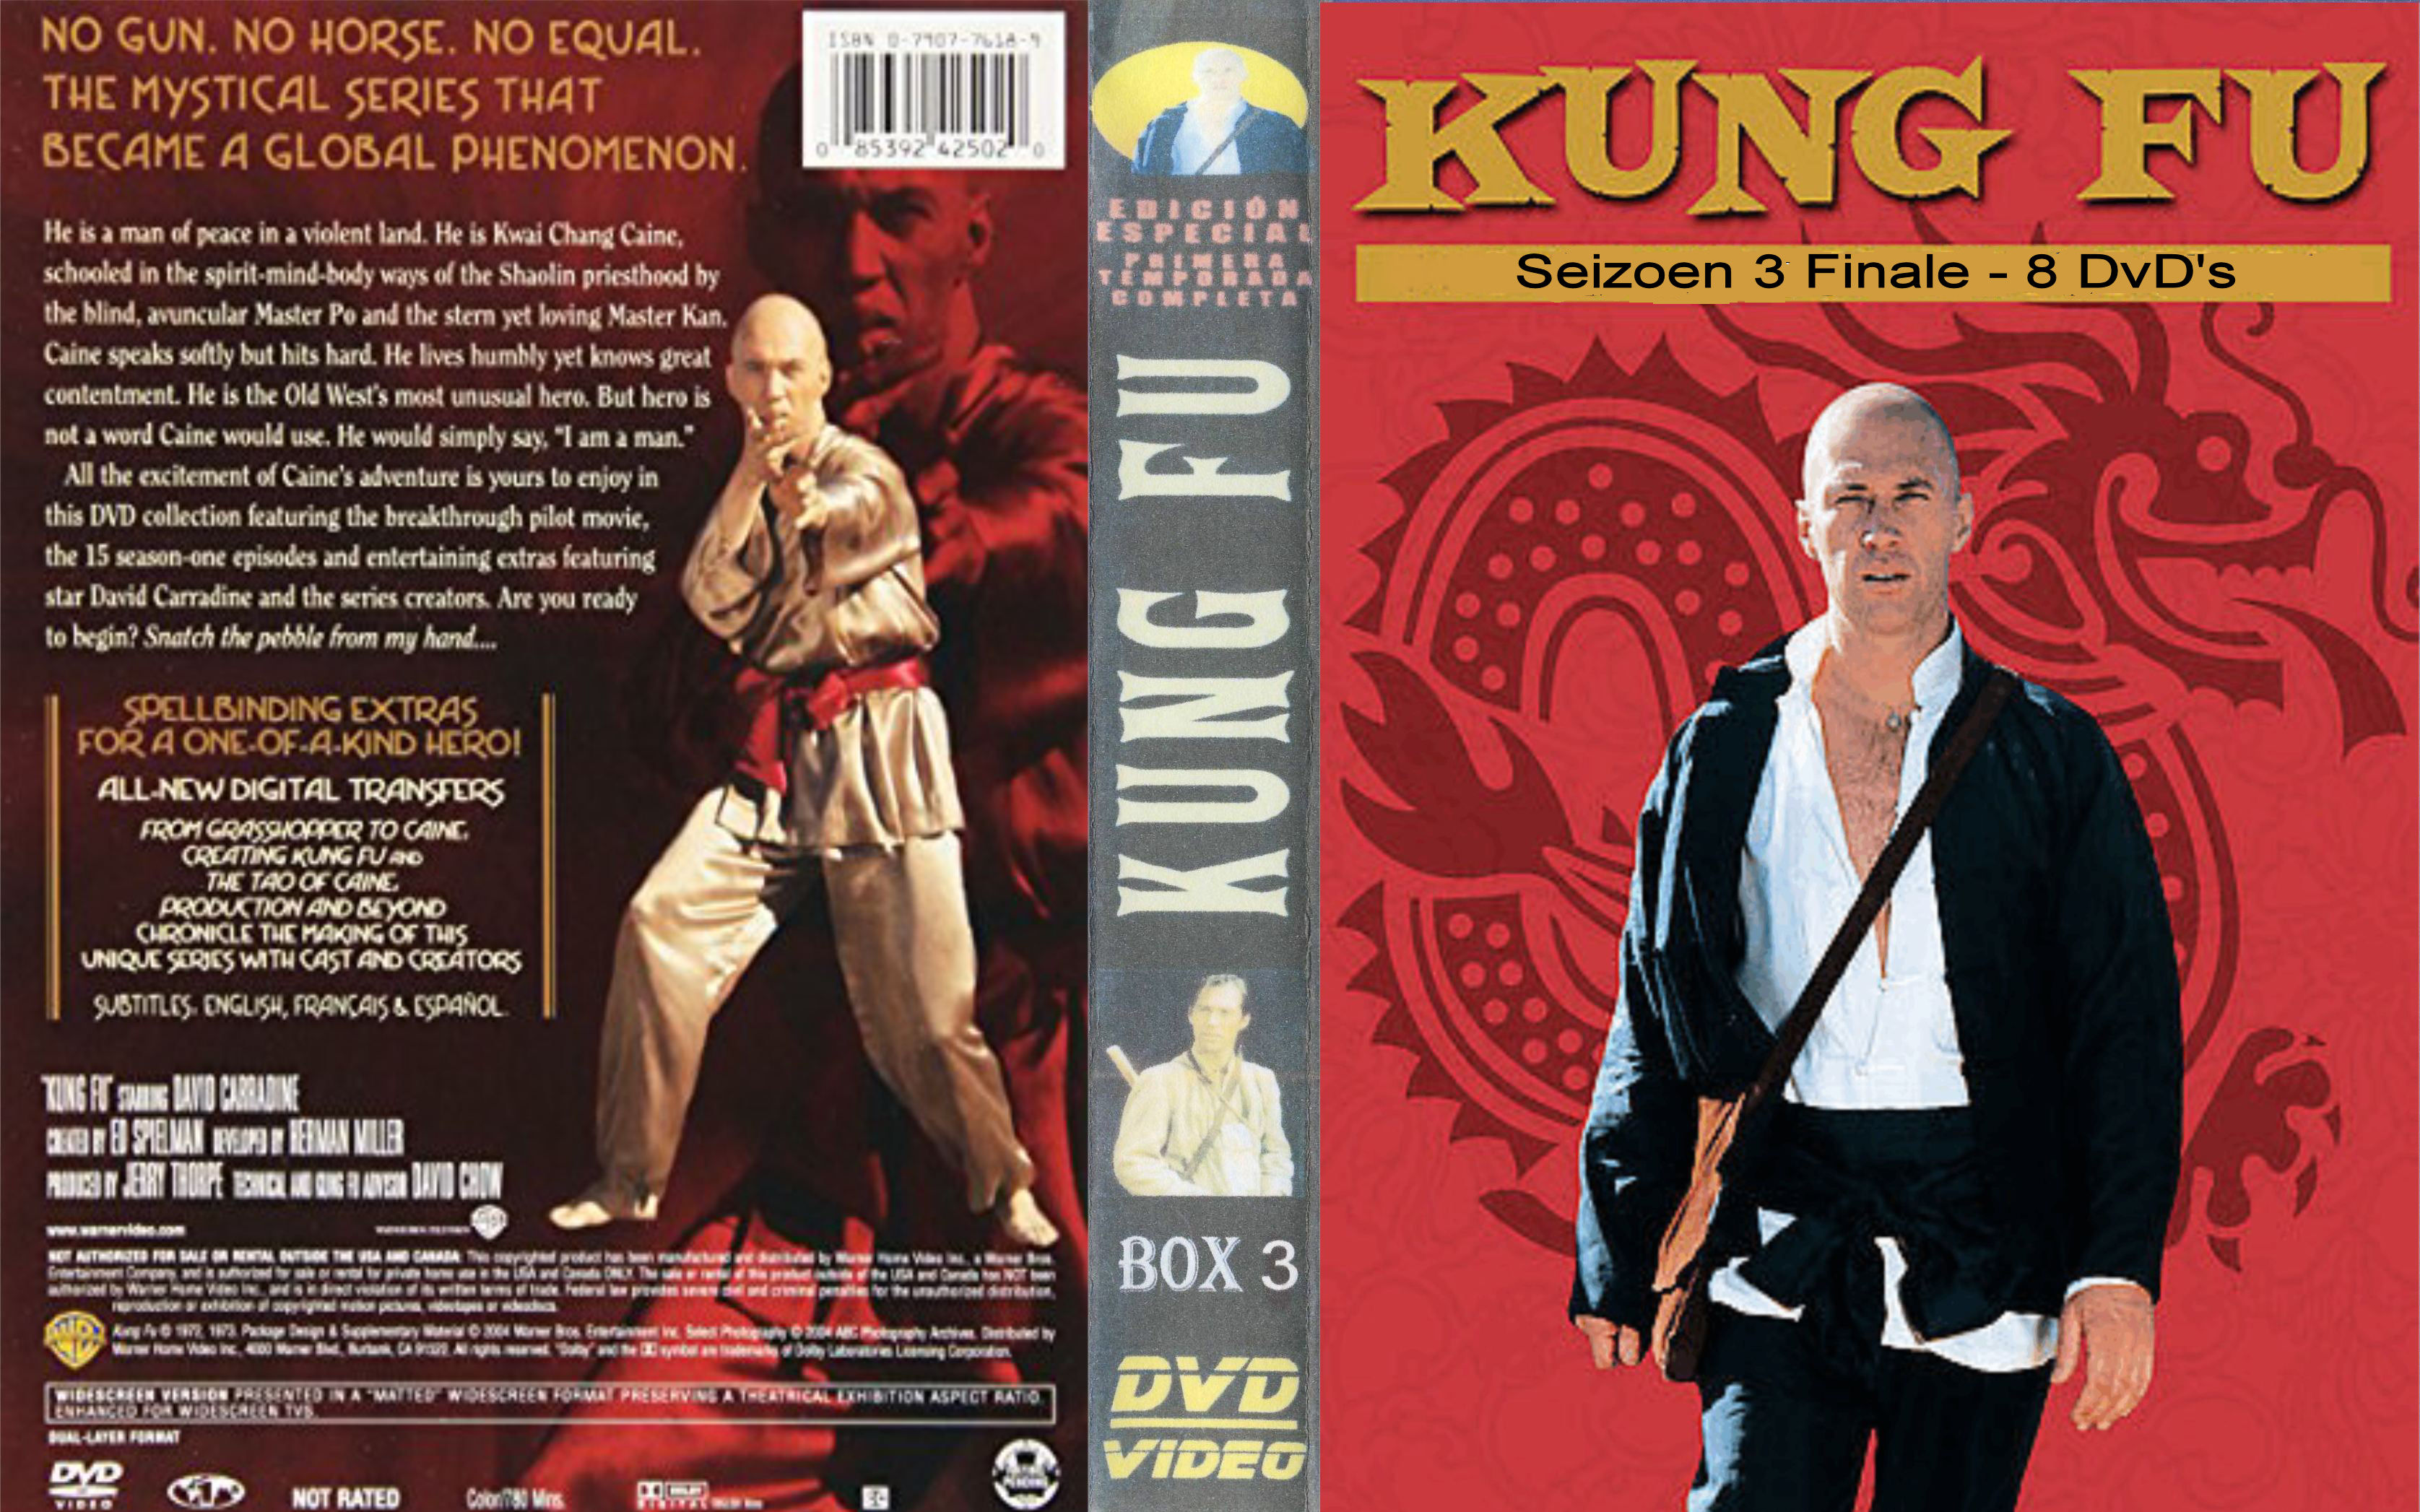 Kung Fu ( David Carradine ) 1974 - 75 Seizoen 3 - DvD 8 Finale